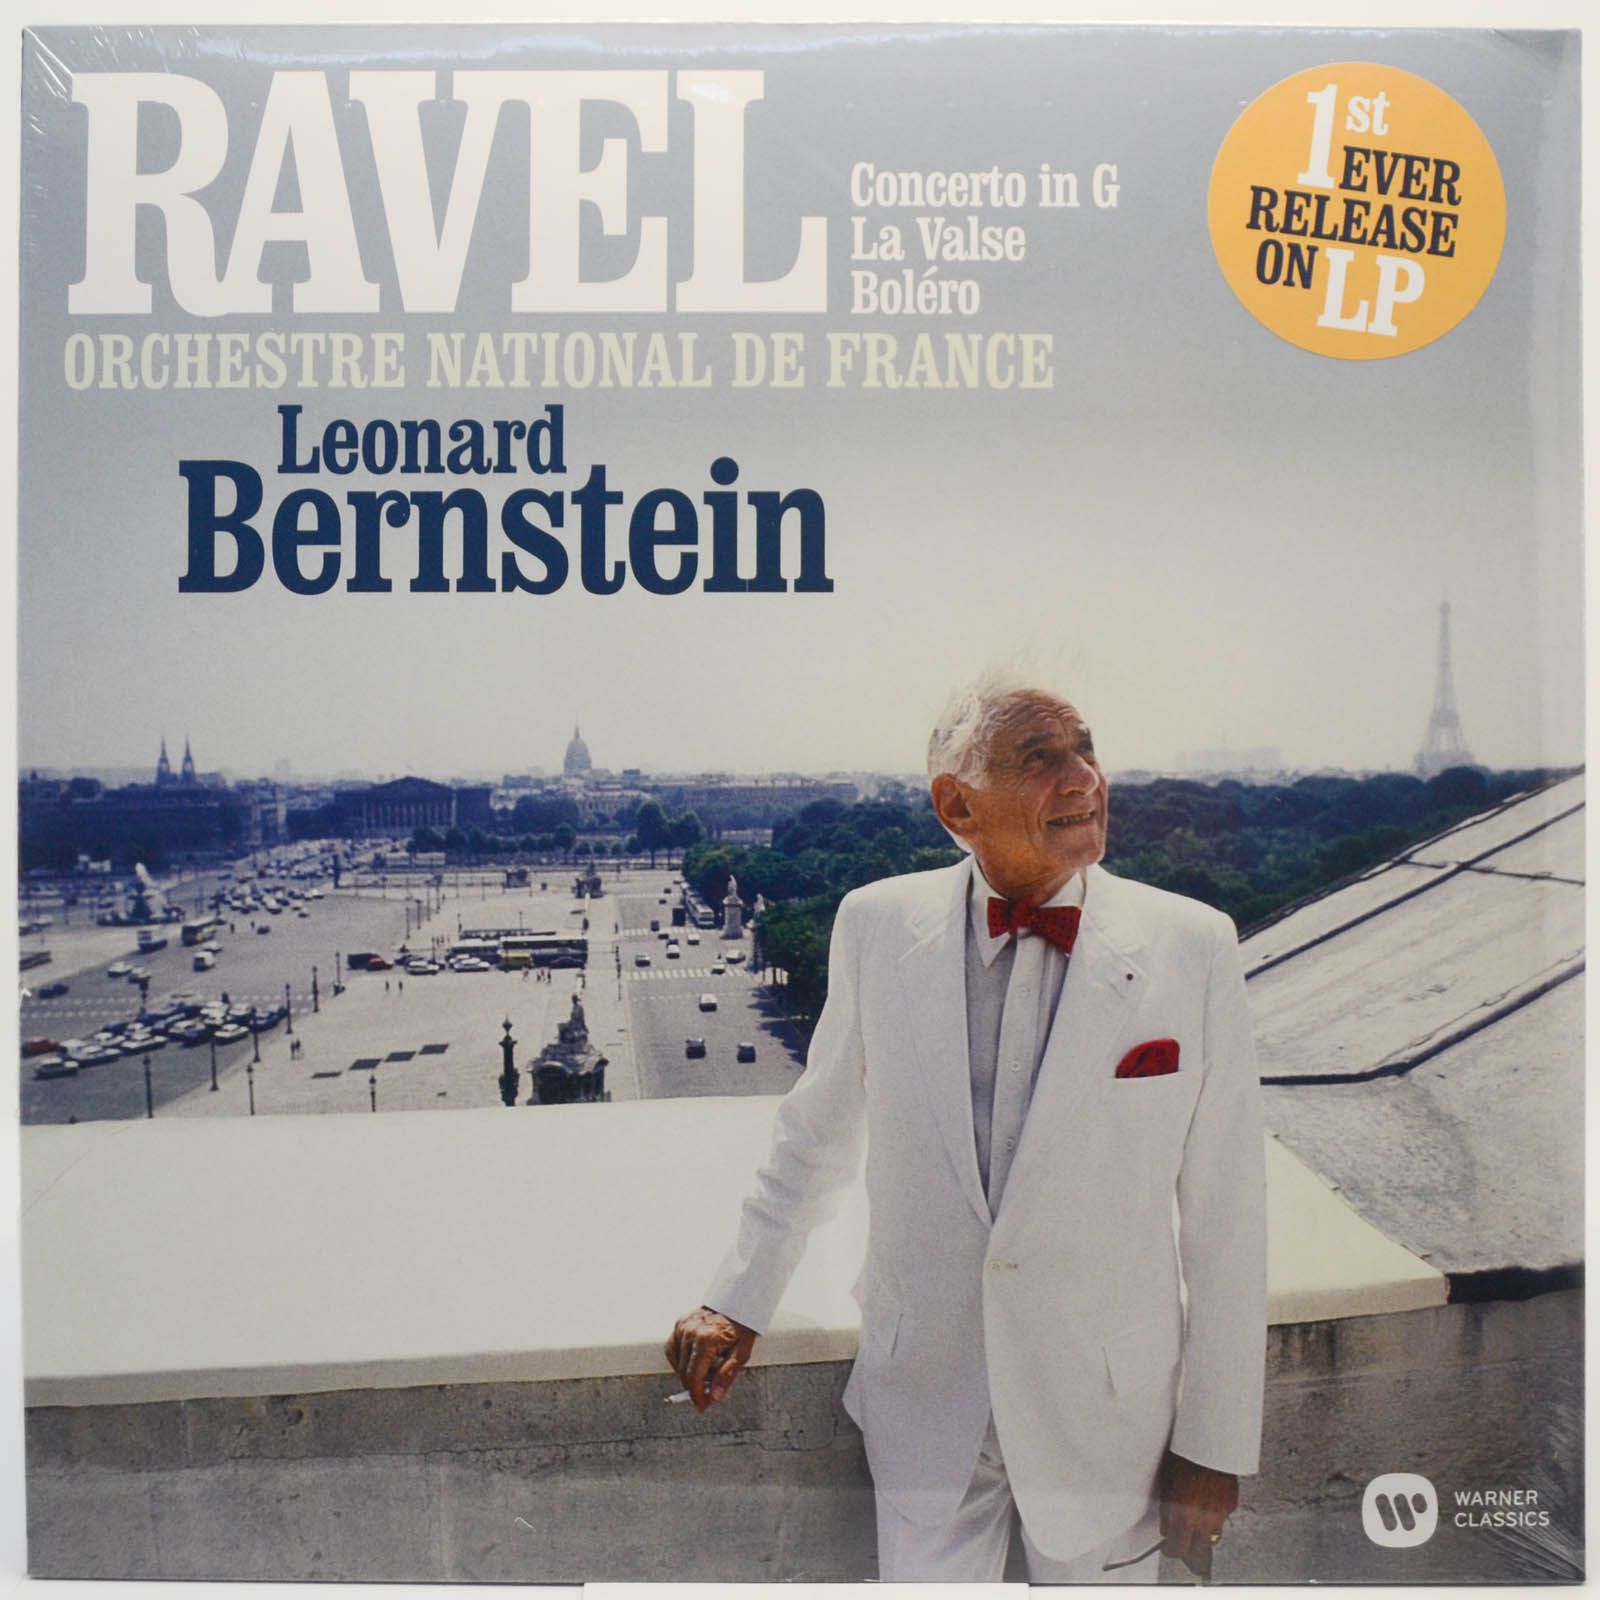 Ravel, Orchestre National De France, Leonard Bernstein — Concerto In G / La Valse / Boléro, 2019